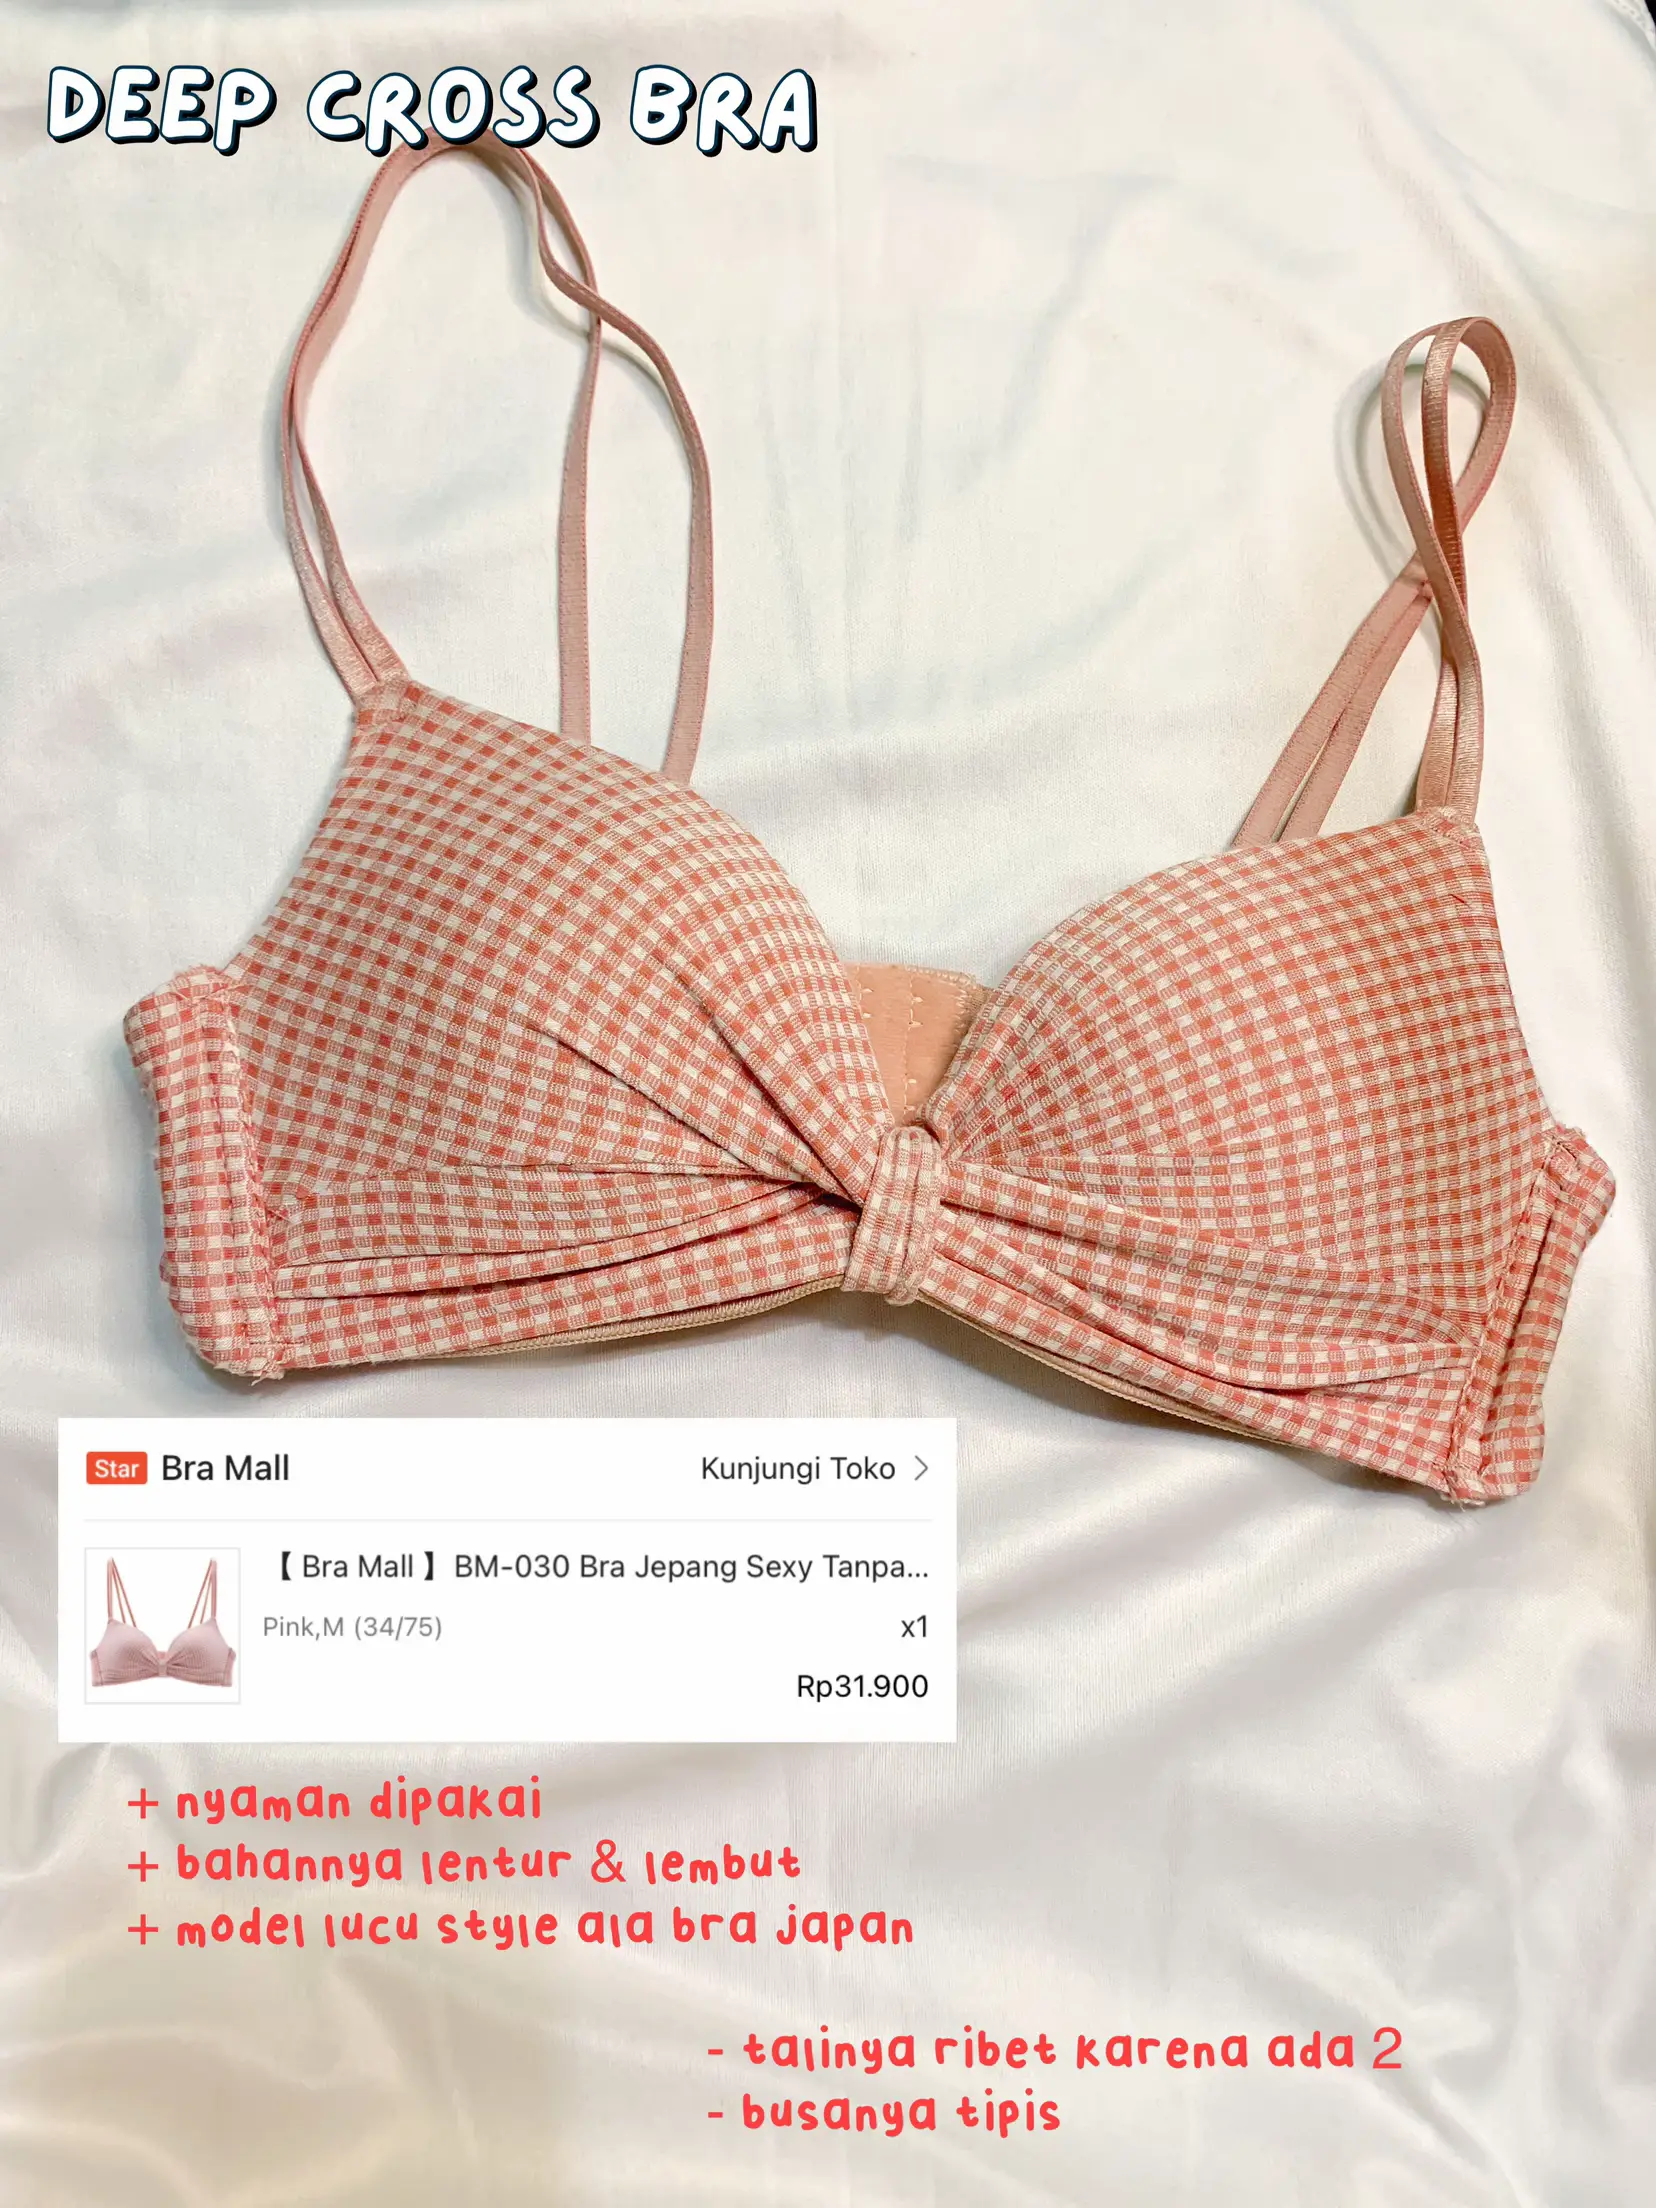 Pakai bra ini untuk baju kamu, bra recommendation, Gallery posted by  Sheryl louis